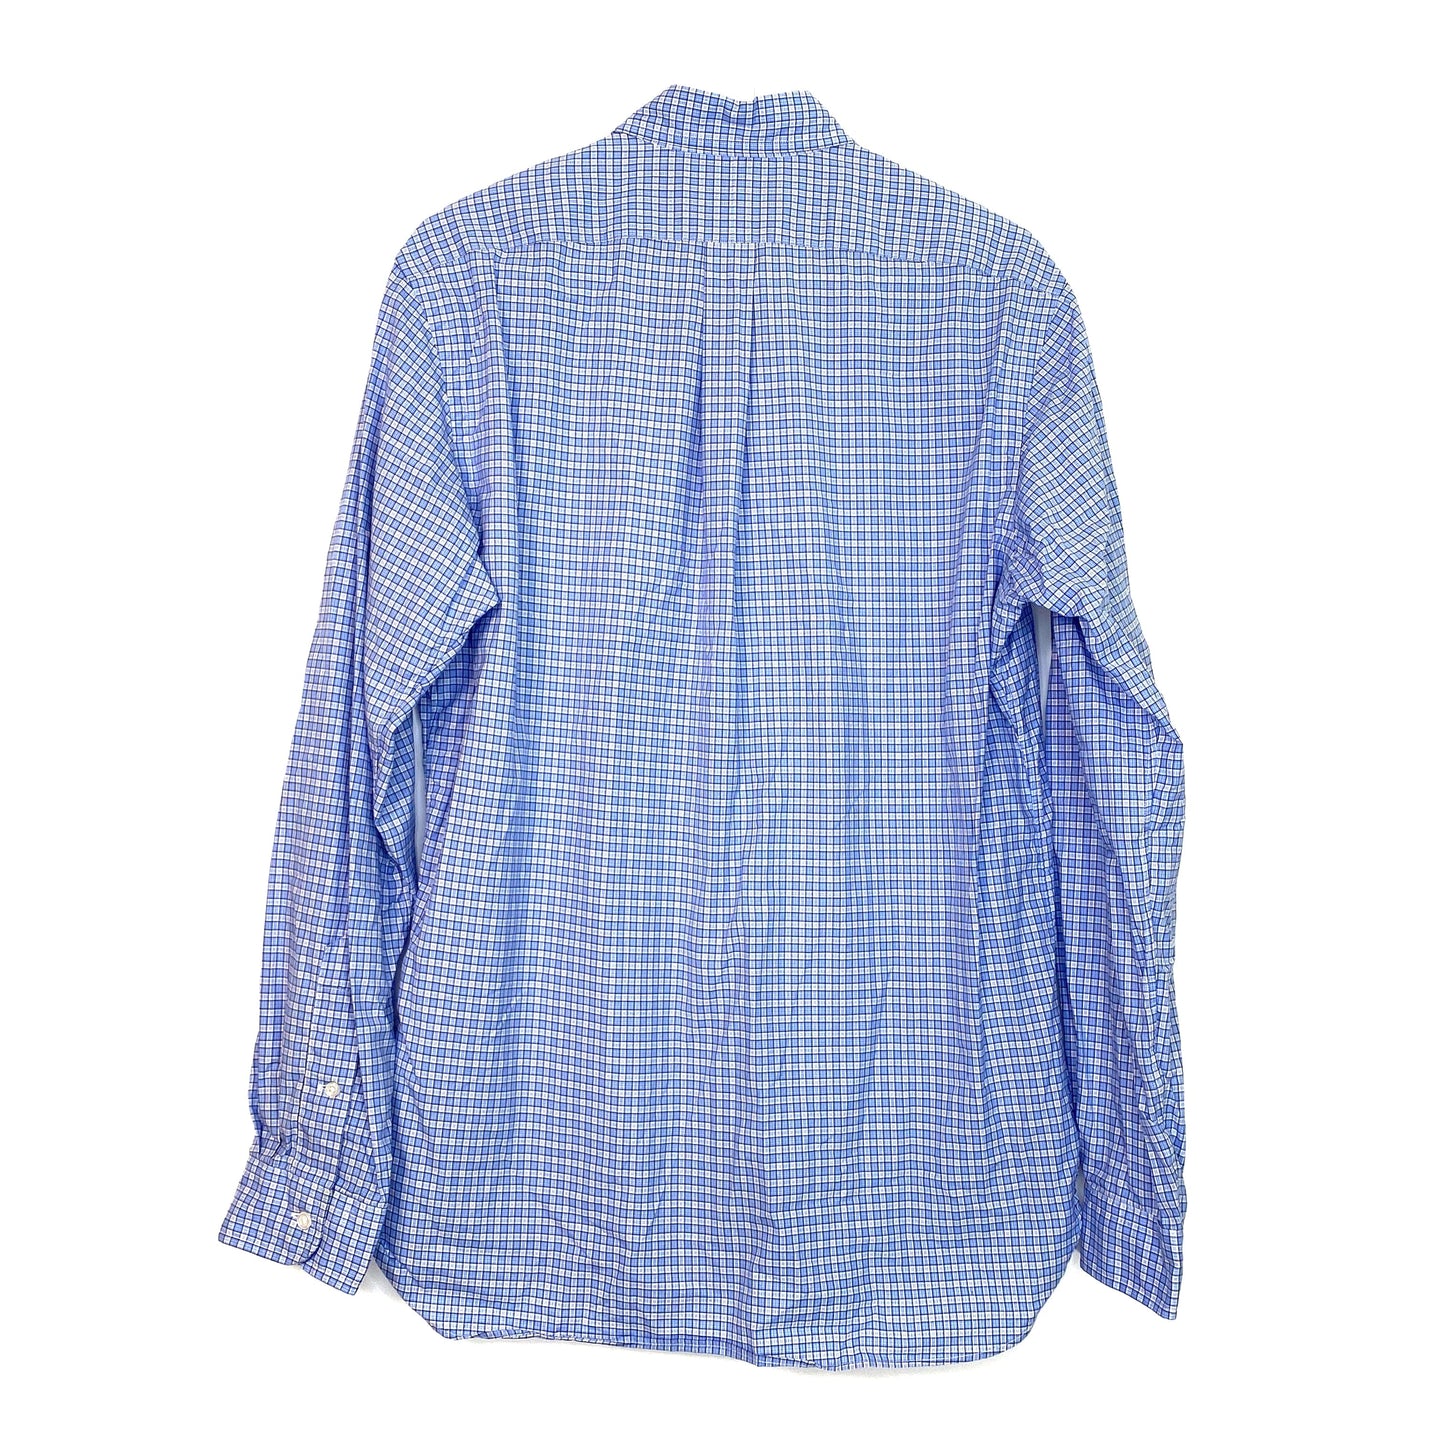 RALPH LAUREN Mens Size M Blue White Checked Long Sleeve Button Down Dress Shirt